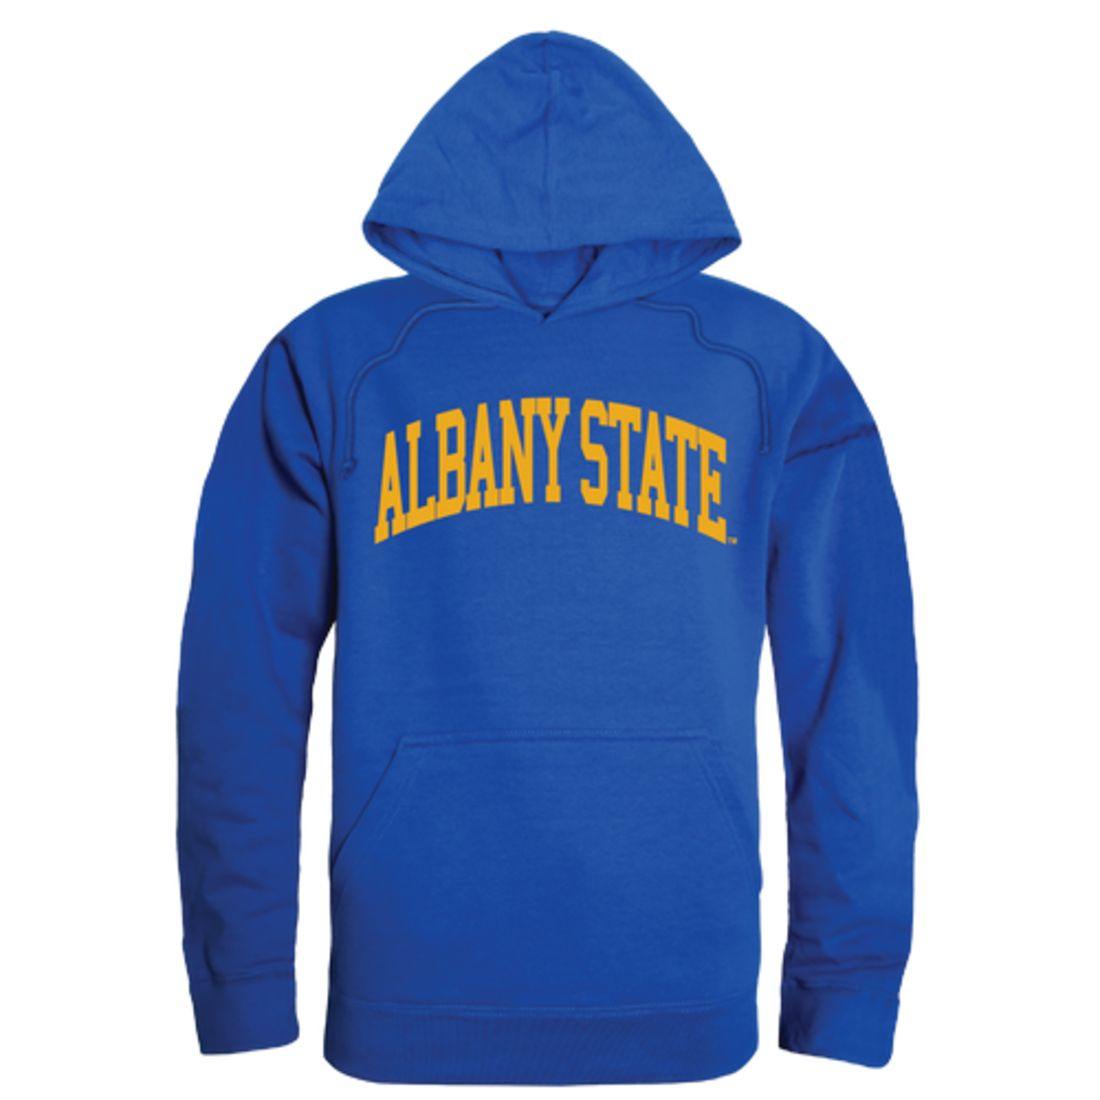 ASU Albany State University Golden Rams College Hoodie Sweatshirt Royal-Campus-Wardrobe